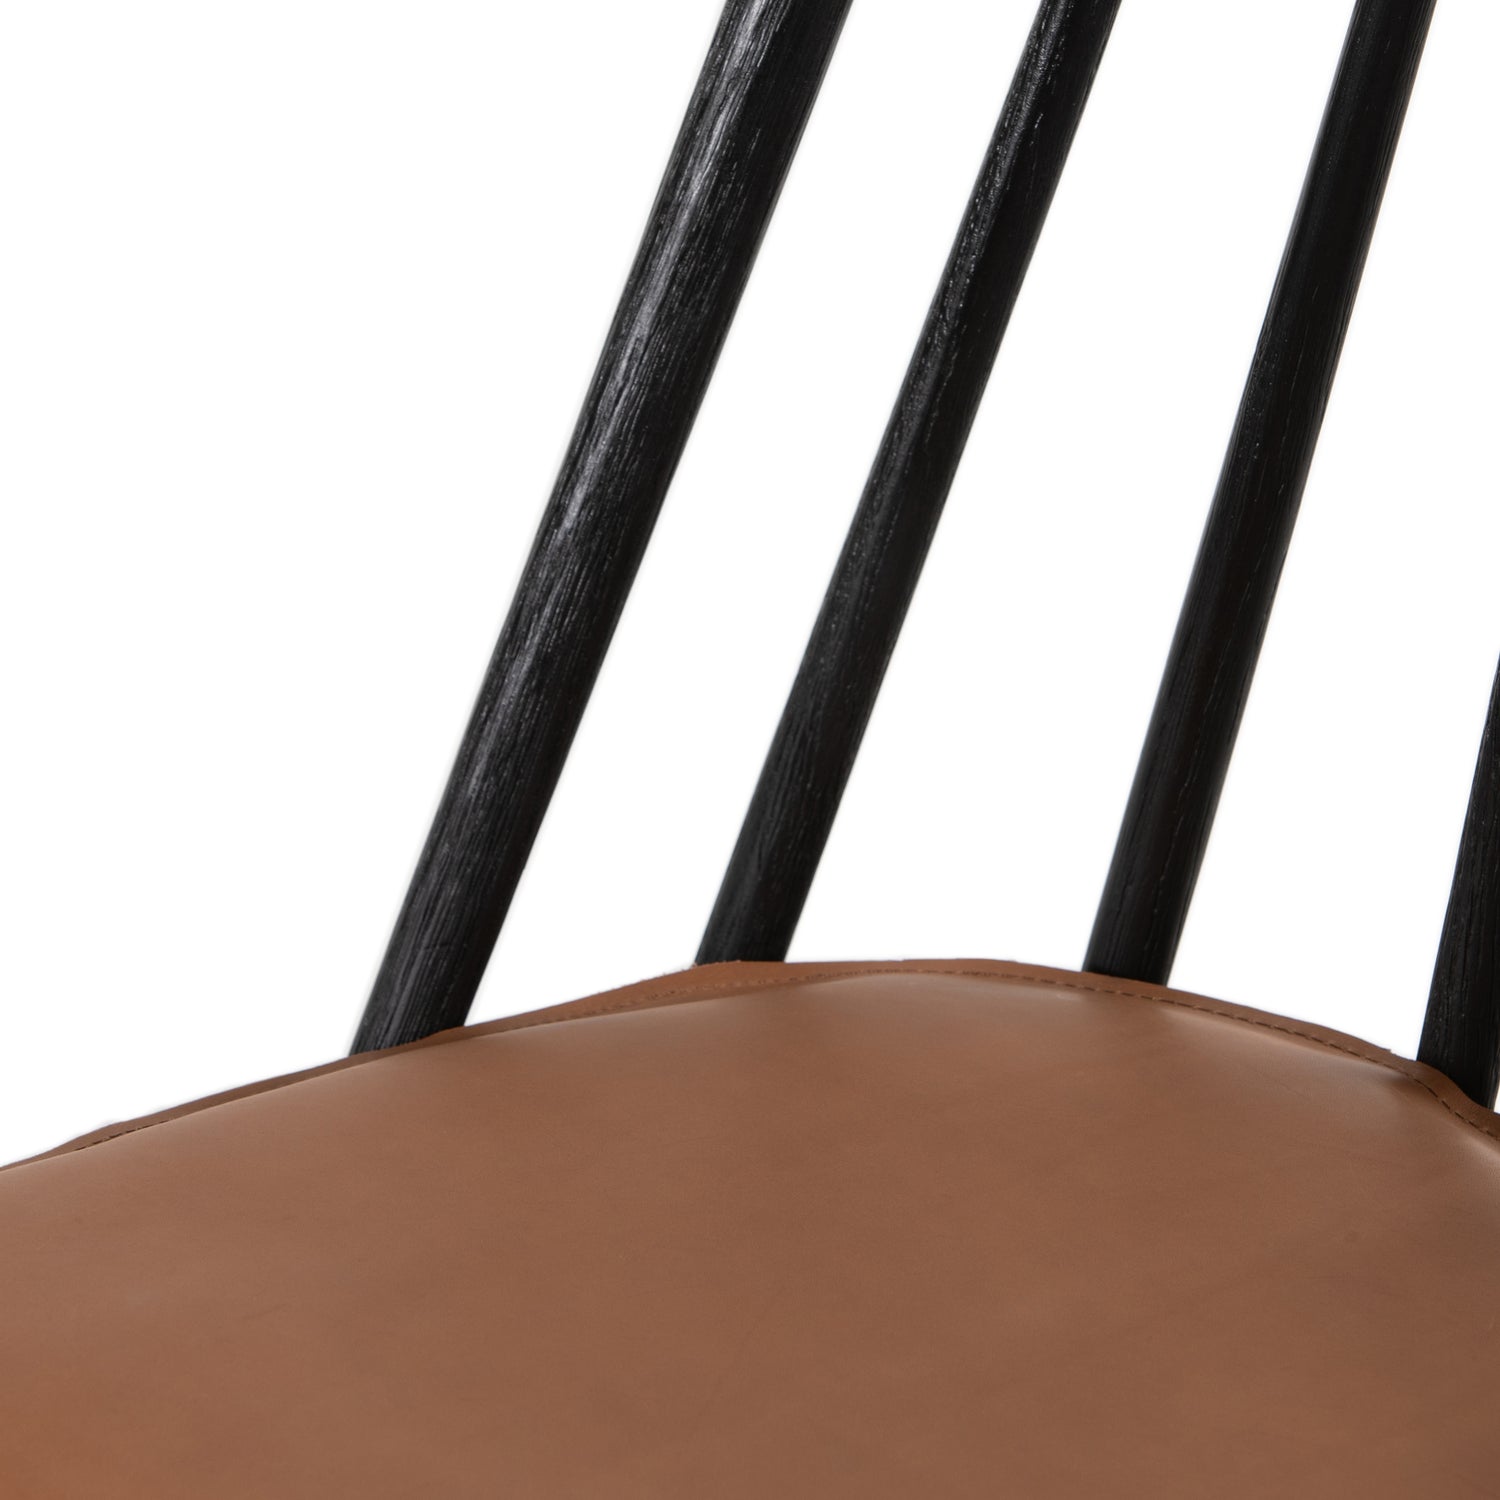 Black Oak & Whiskey Saddle Leather with Ivory Backing Fabric | Lewis Windsor Chair | Valley Ridge Furniture